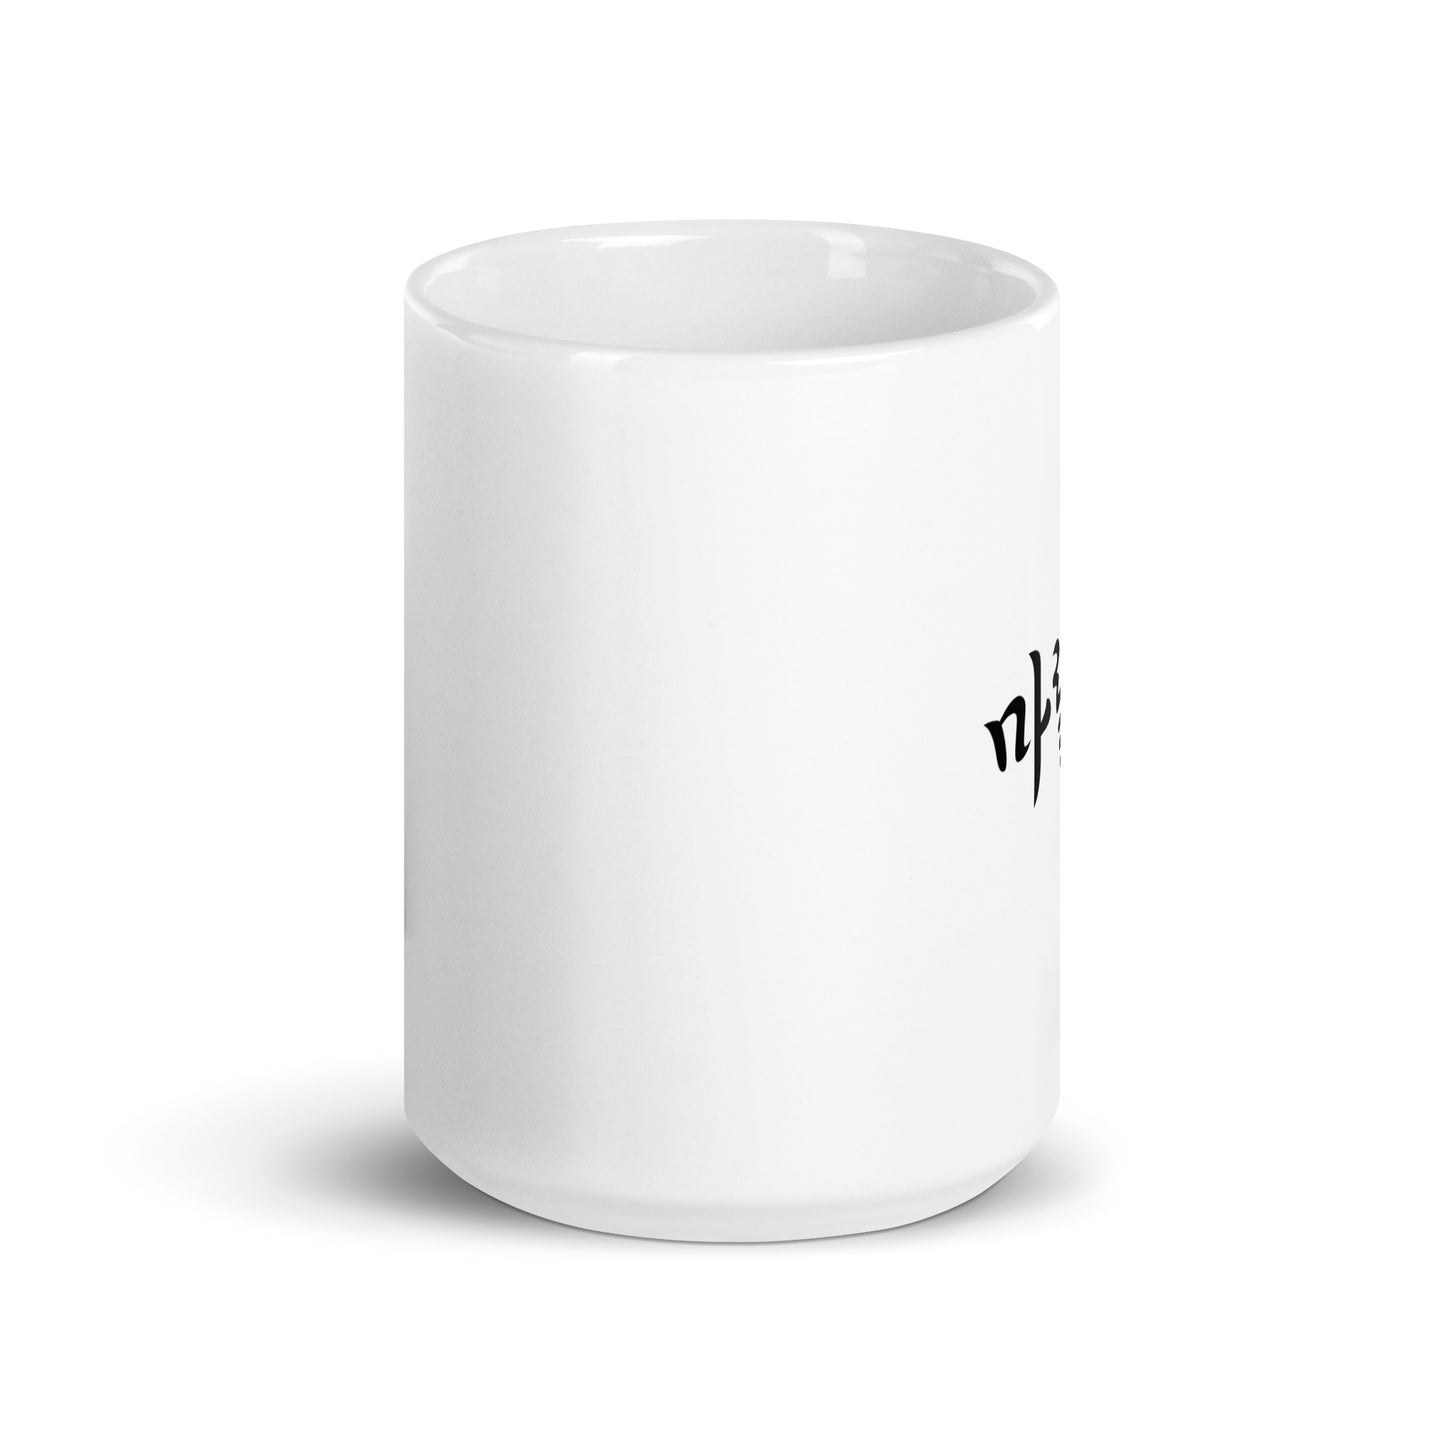 Marilyn in Hangul Custom Name Gift Ceramic Mug